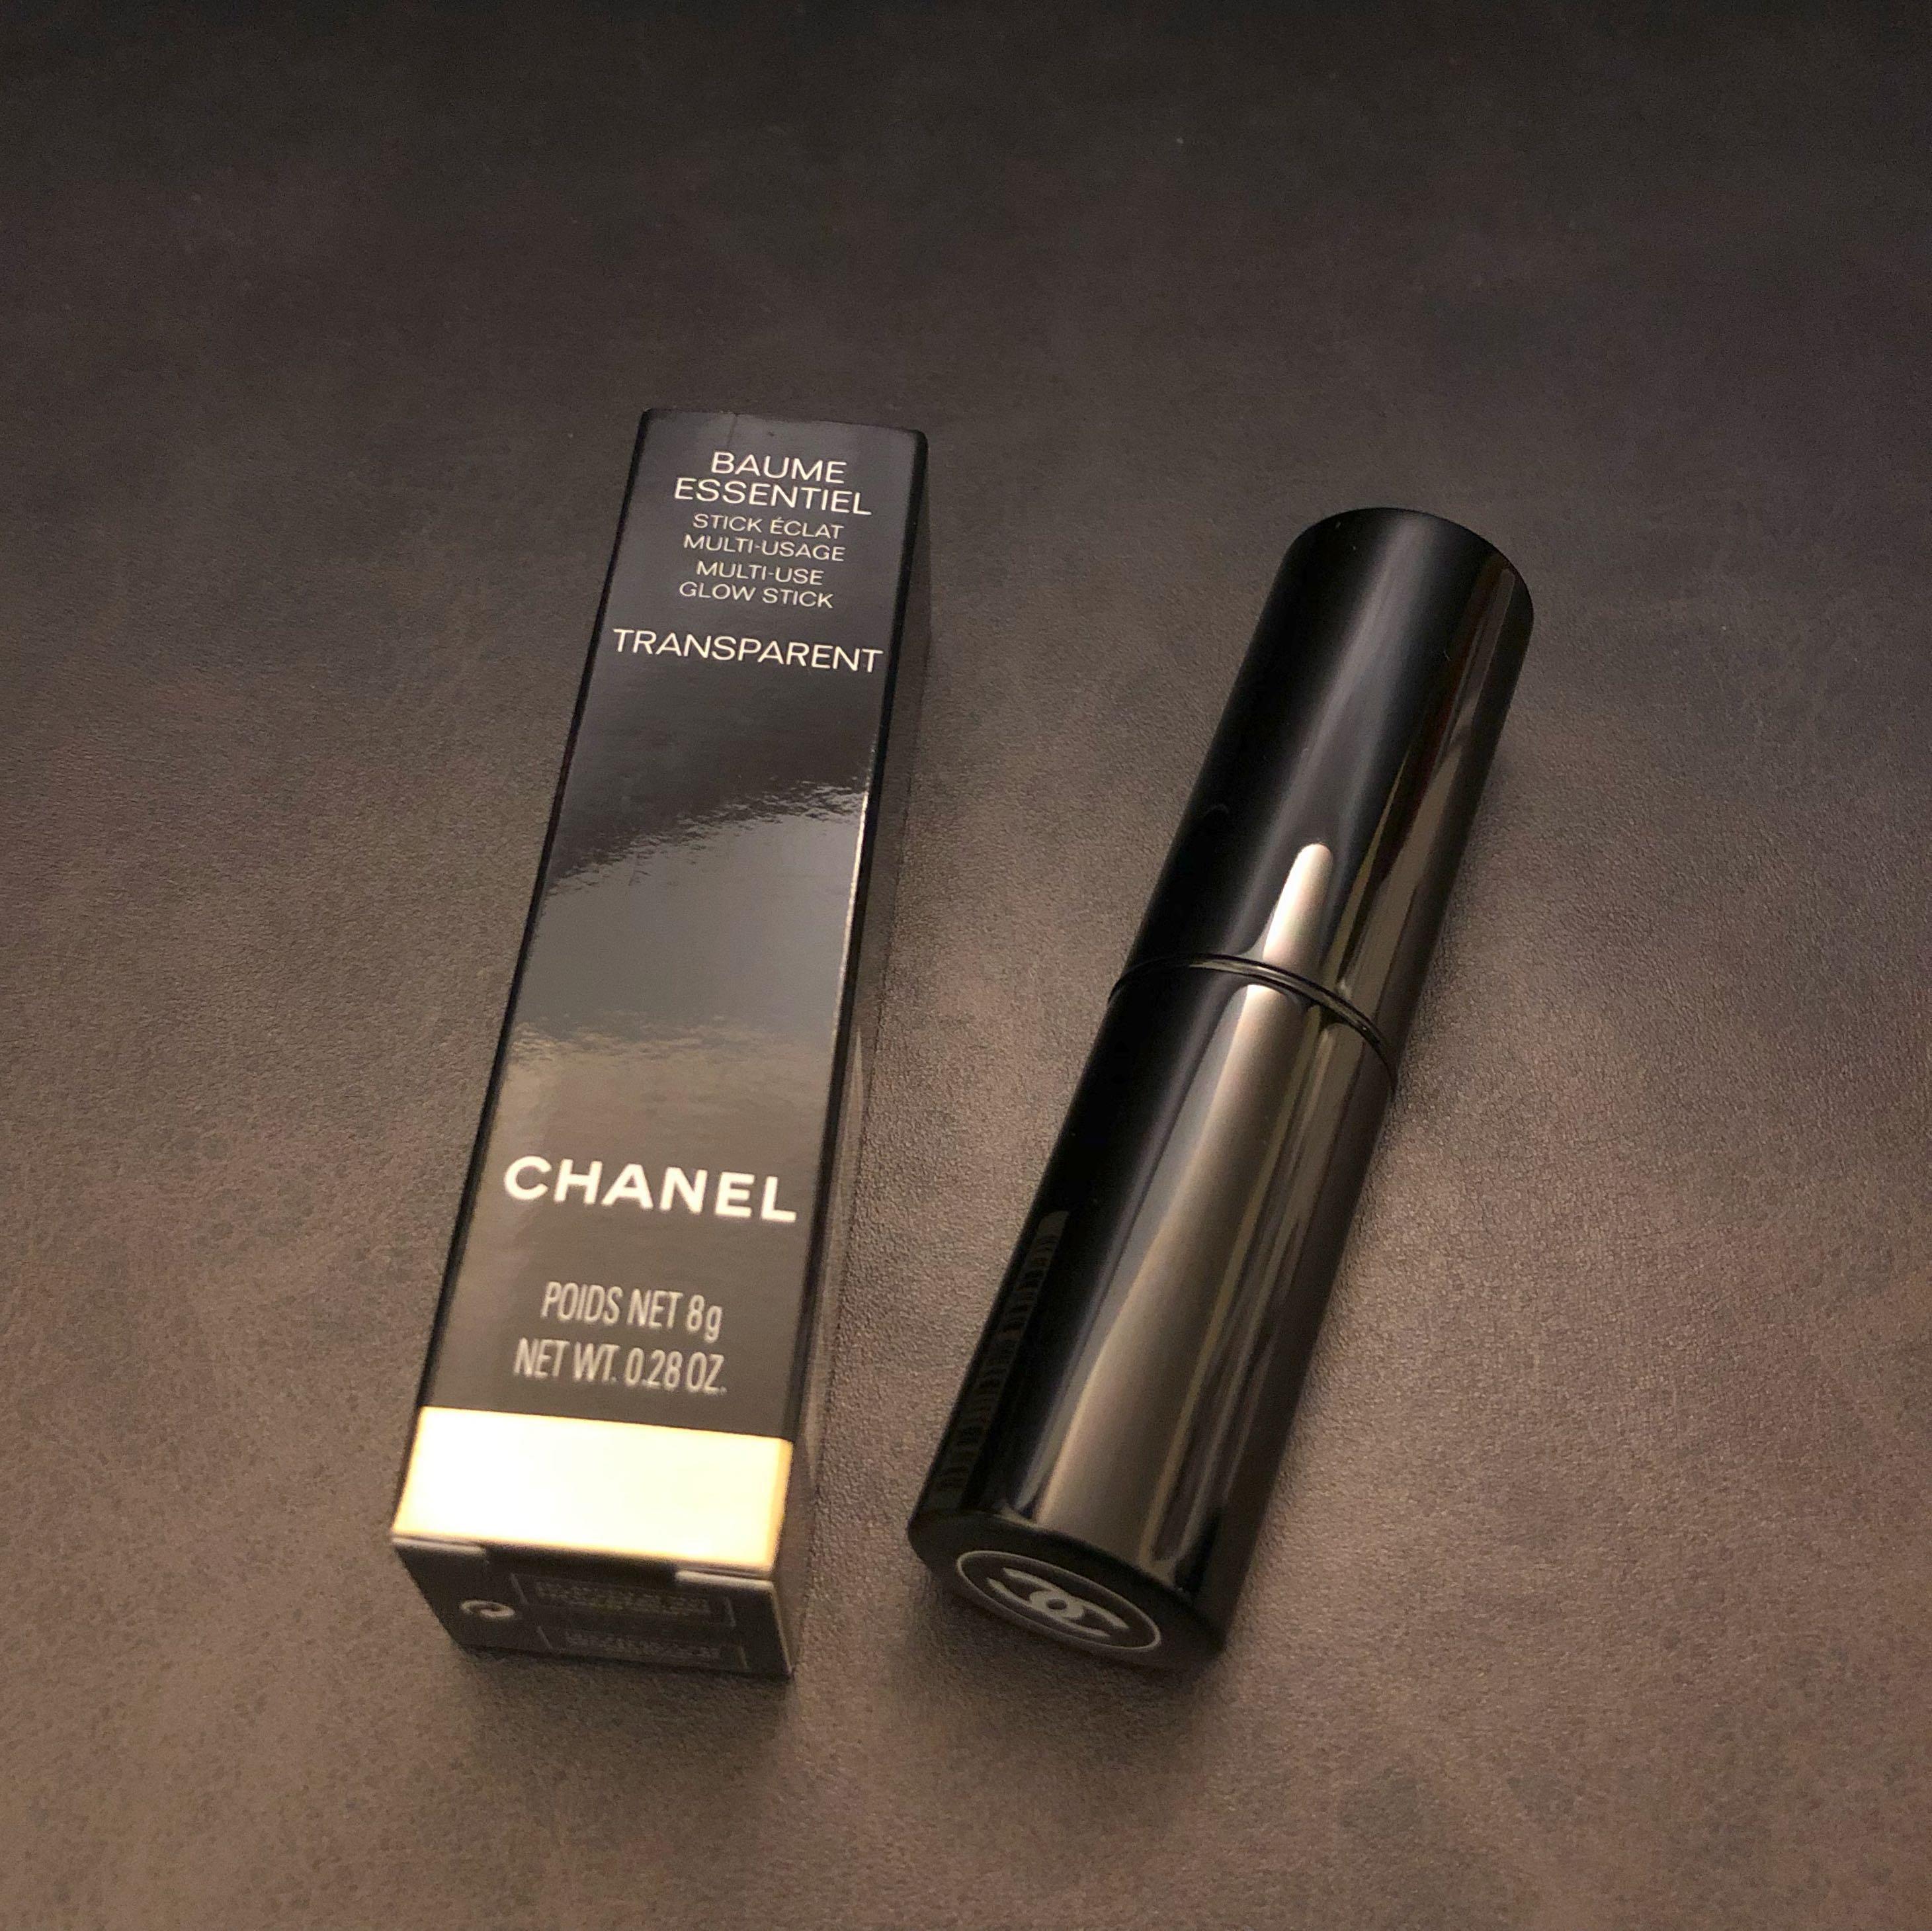 Chanel baume essentiel multi-use glow stick transparent, 美容